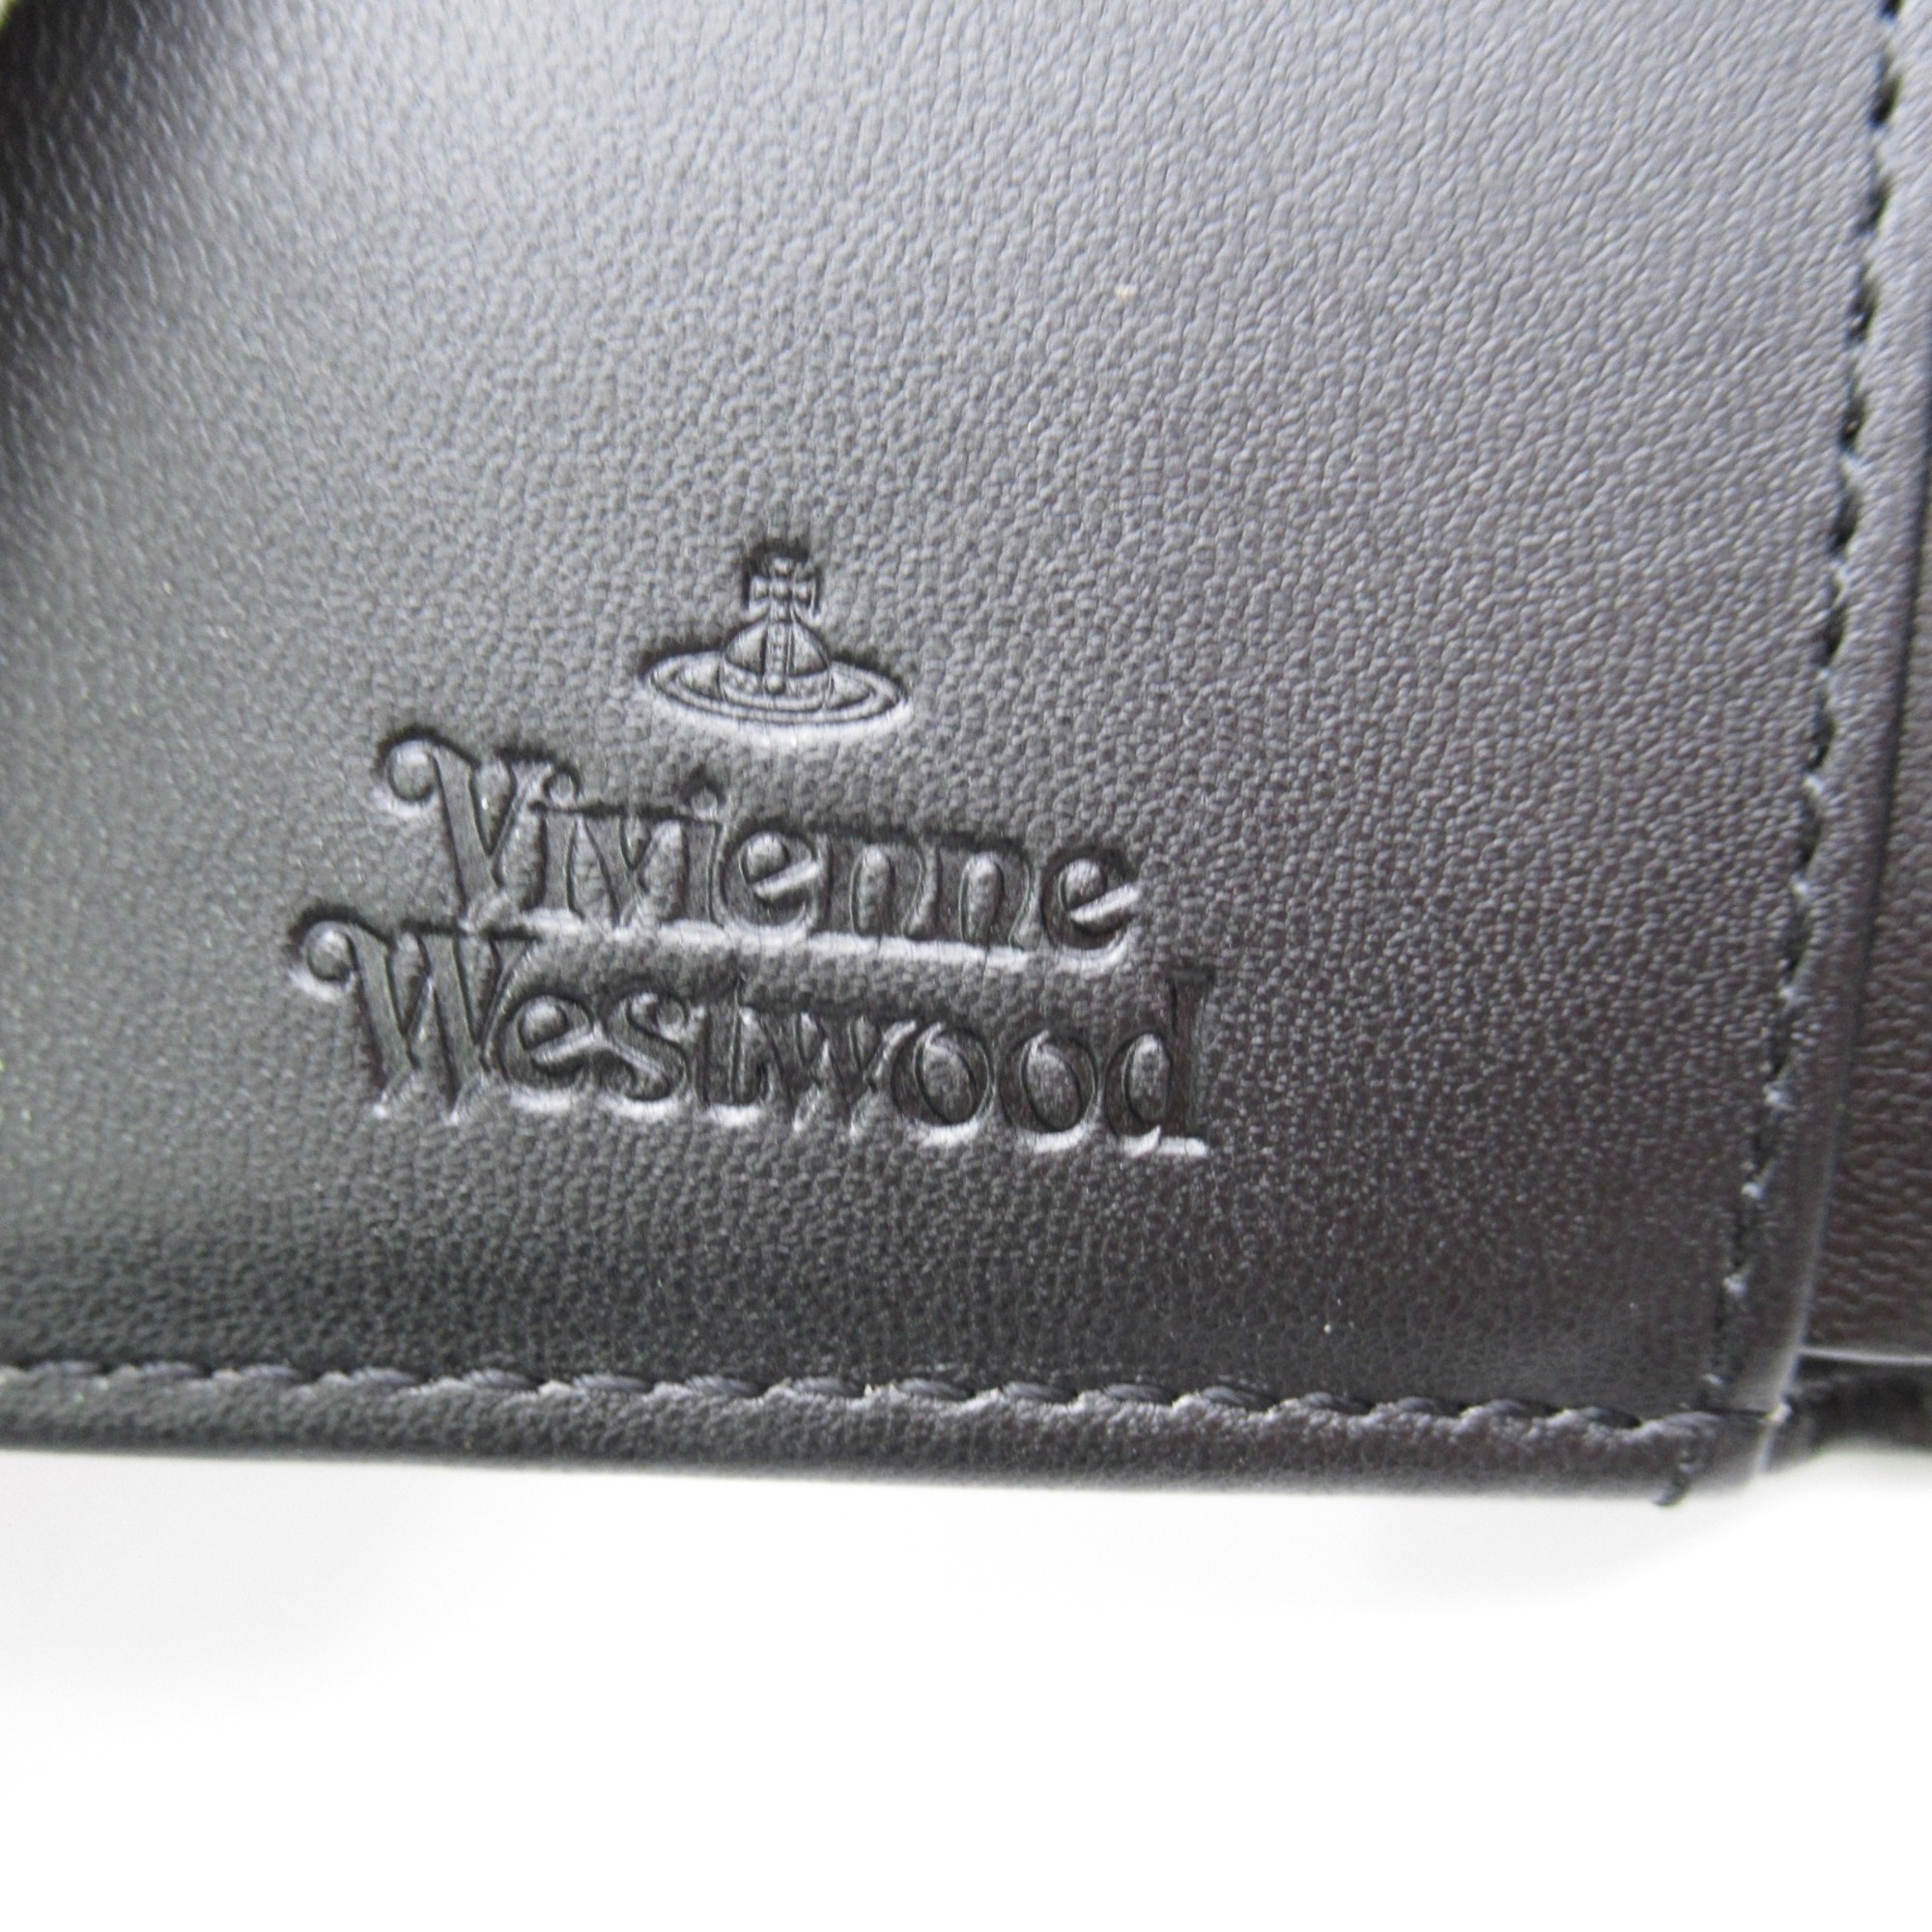 Vivienne Westwood Purse Wallet White madras check Safiano leather Saffiano print 51010018UL0057O101